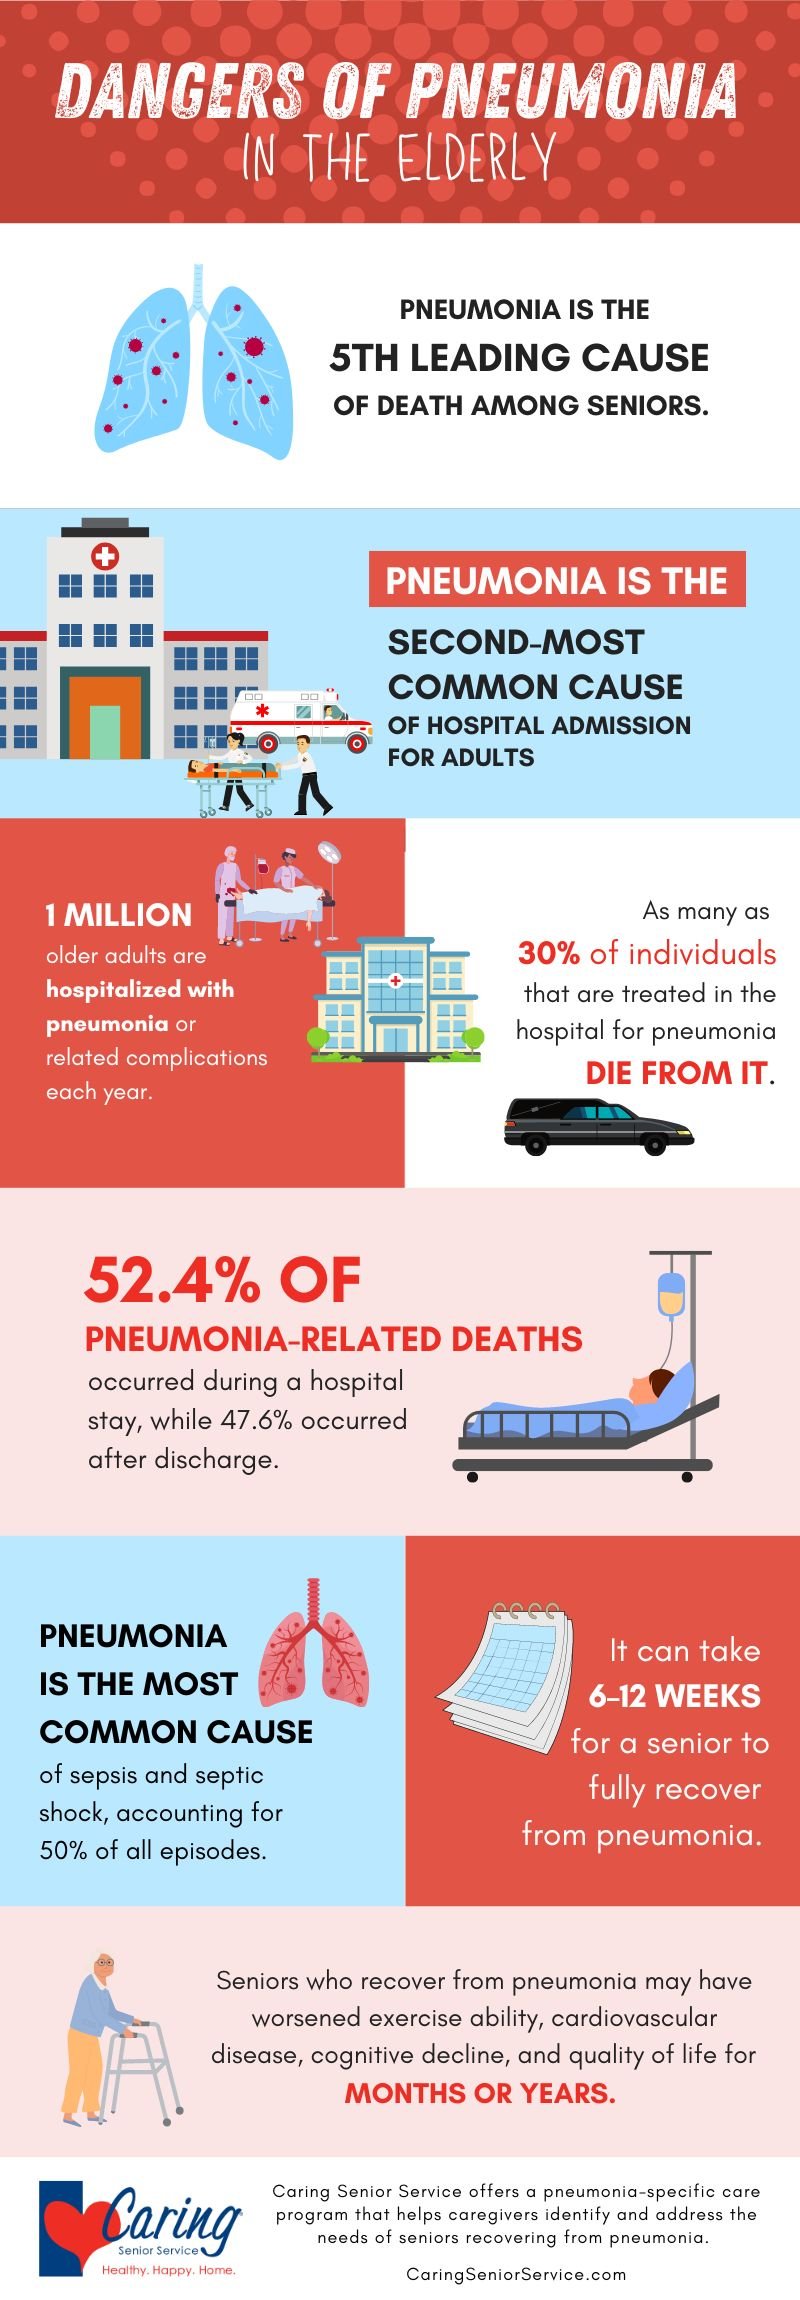 INFOGRAPHIC: The Dangers of Pneumonia in the Elderly